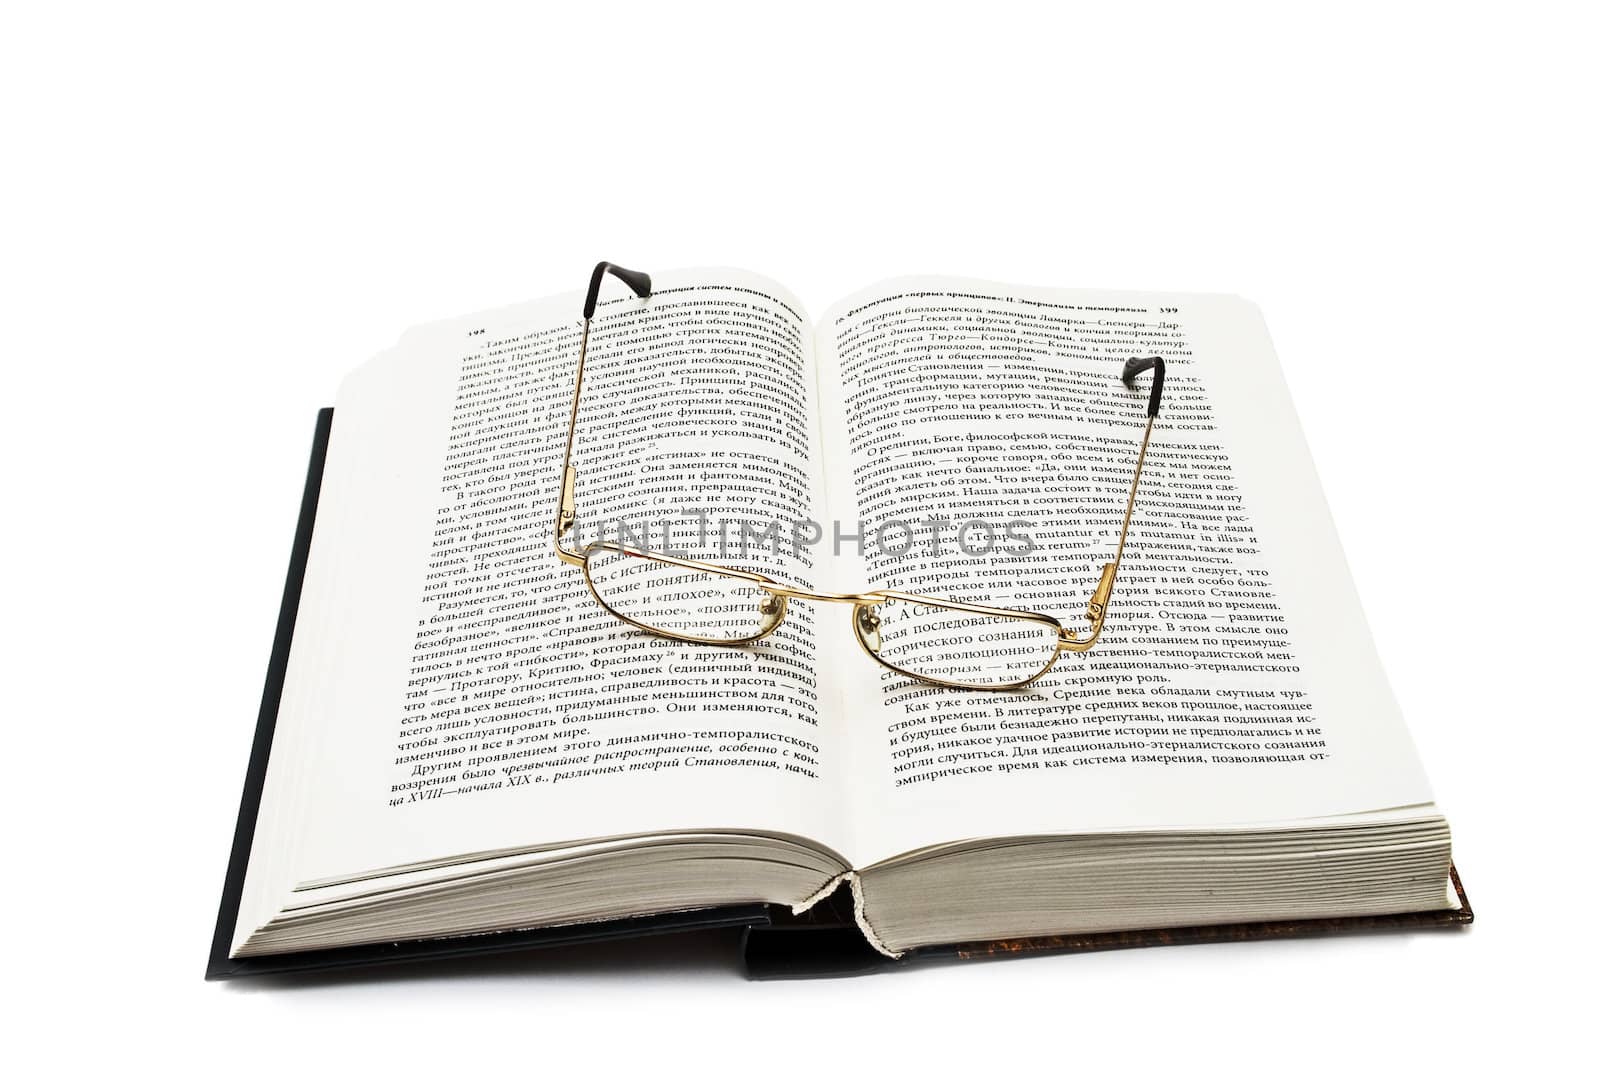 Book and glasses by denisklimov